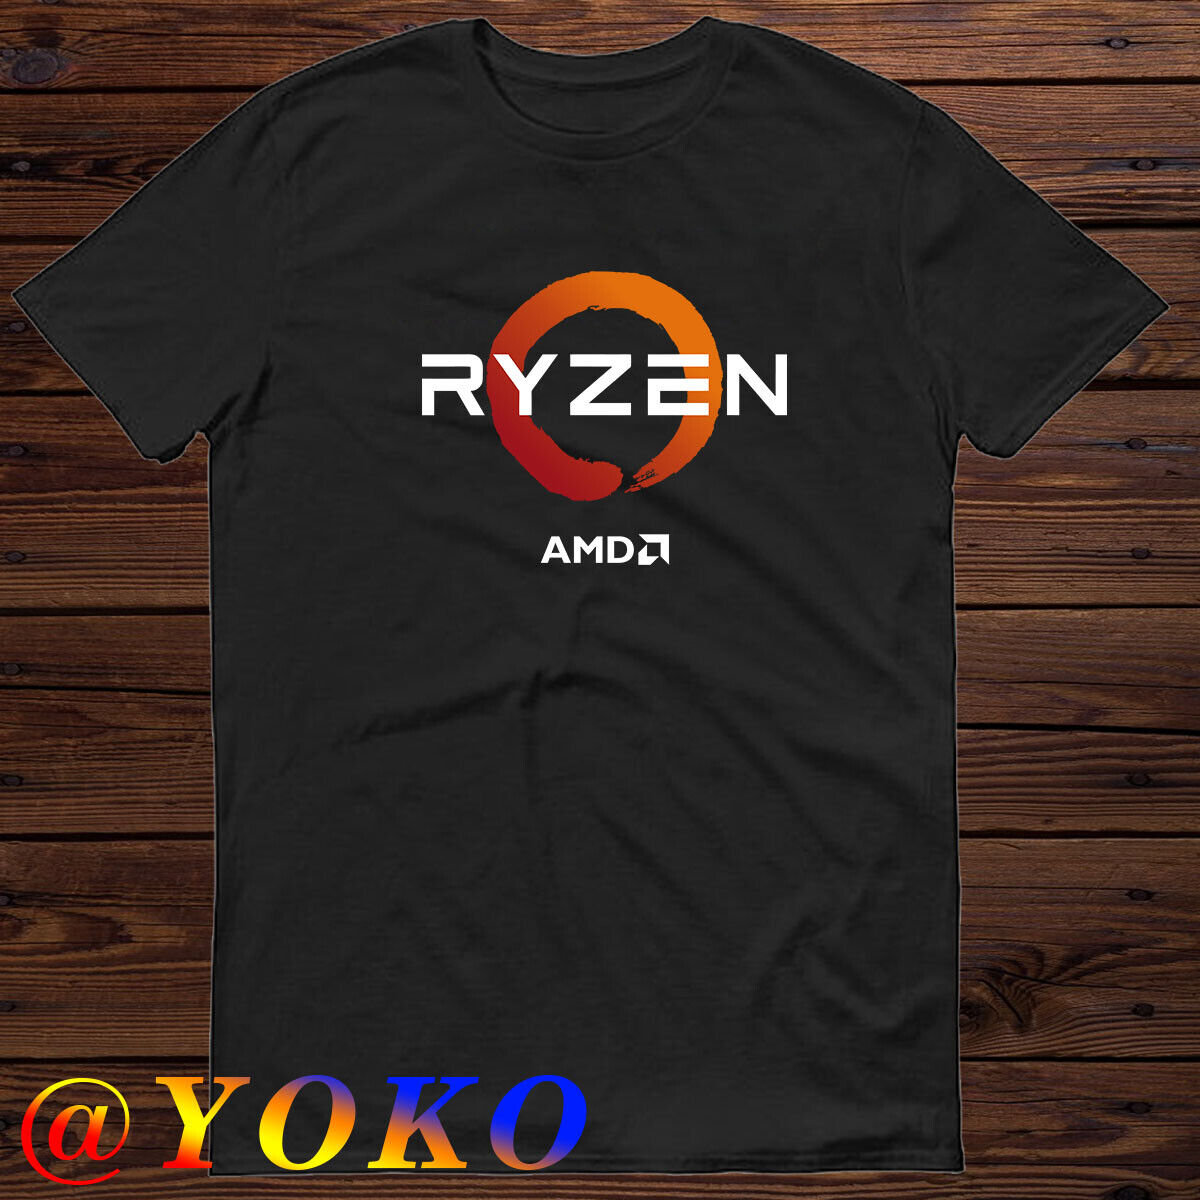 RYZEN AMD Logo Men's Black T-shirt Size S to 5XL